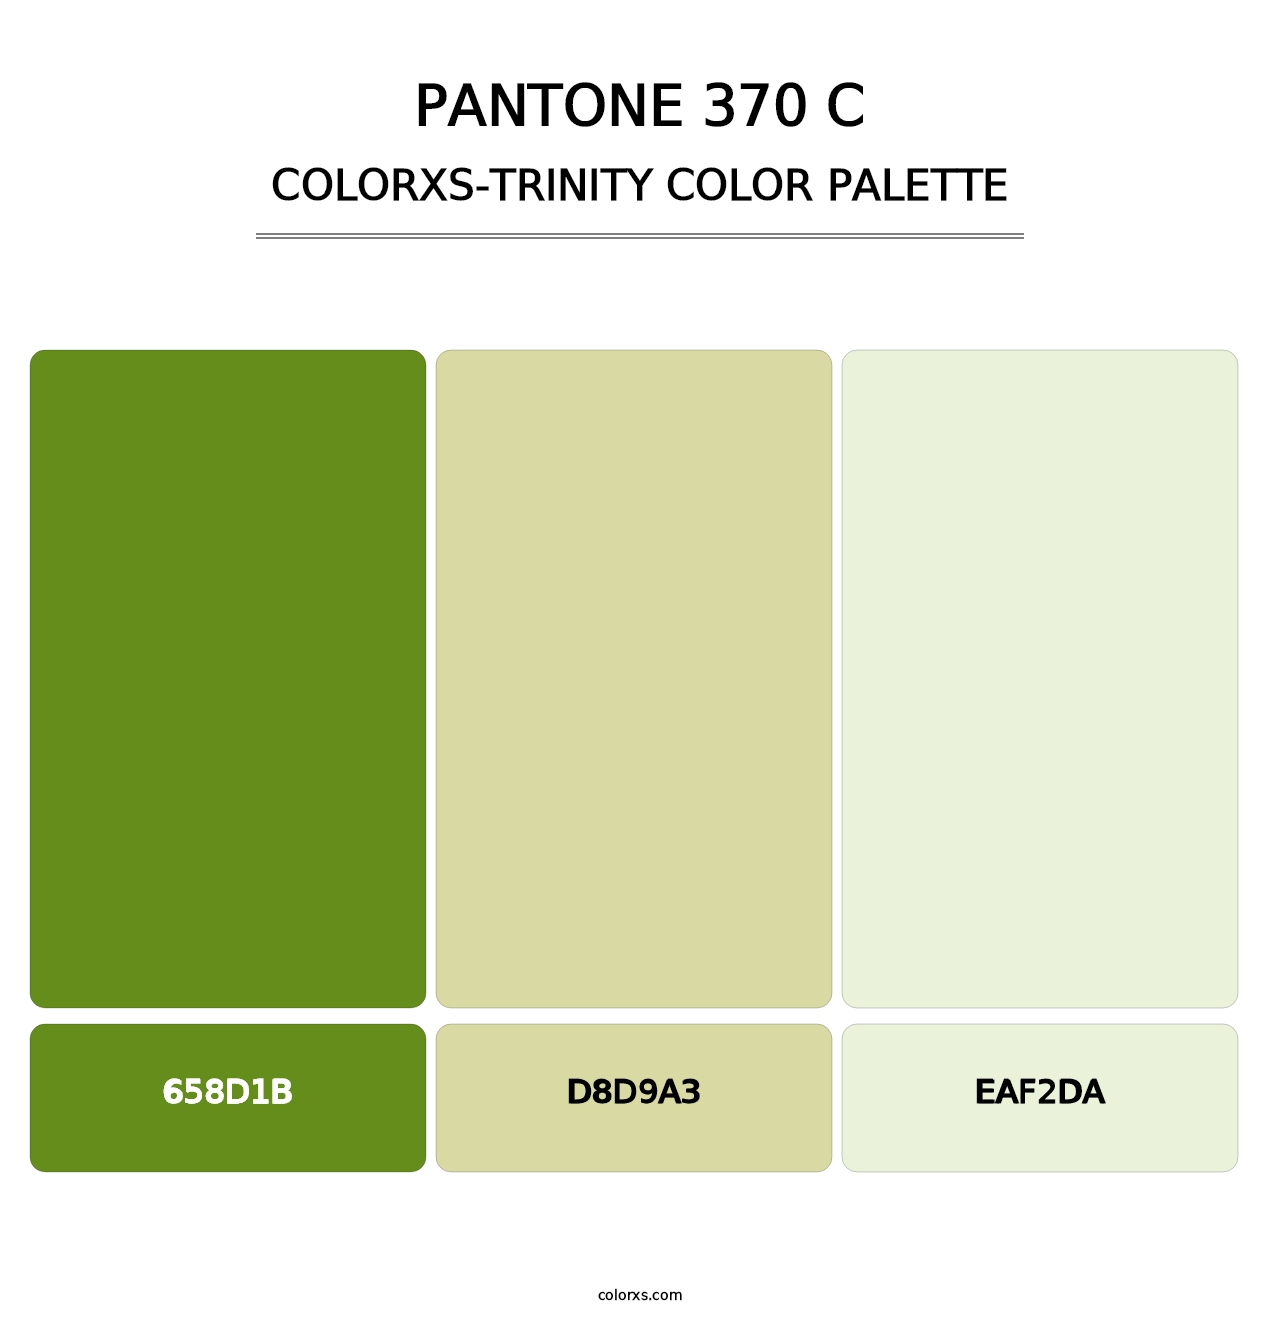 PANTONE 370 C - Colorxs Trinity Palette